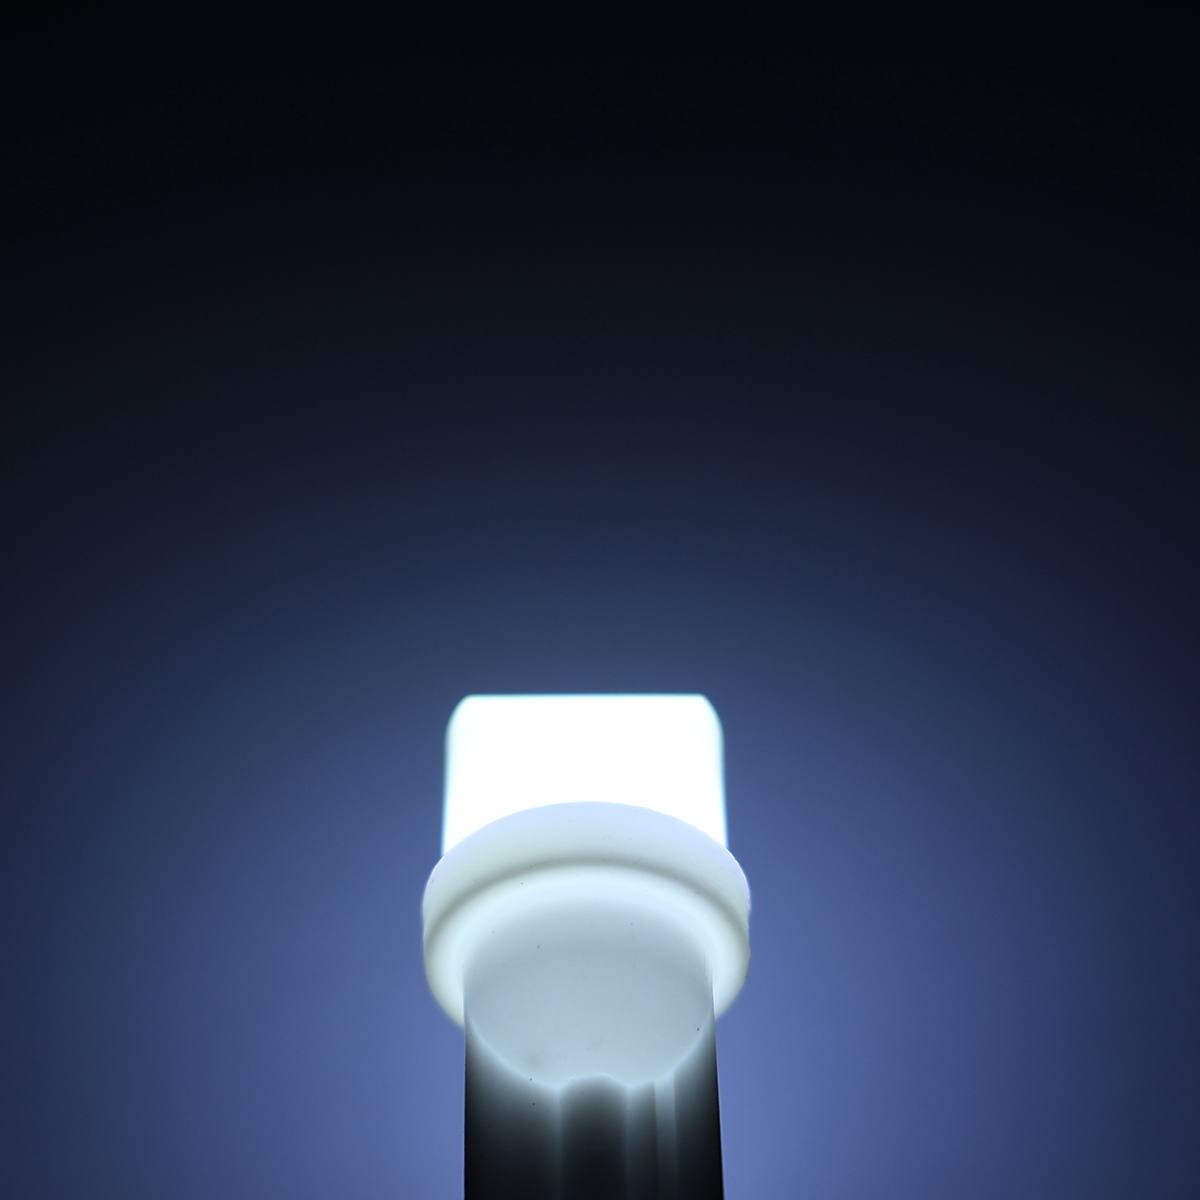 12V T10 COB LED Light Car Side Marker Reading Interior Dome Lamp Bulb Ceramic White